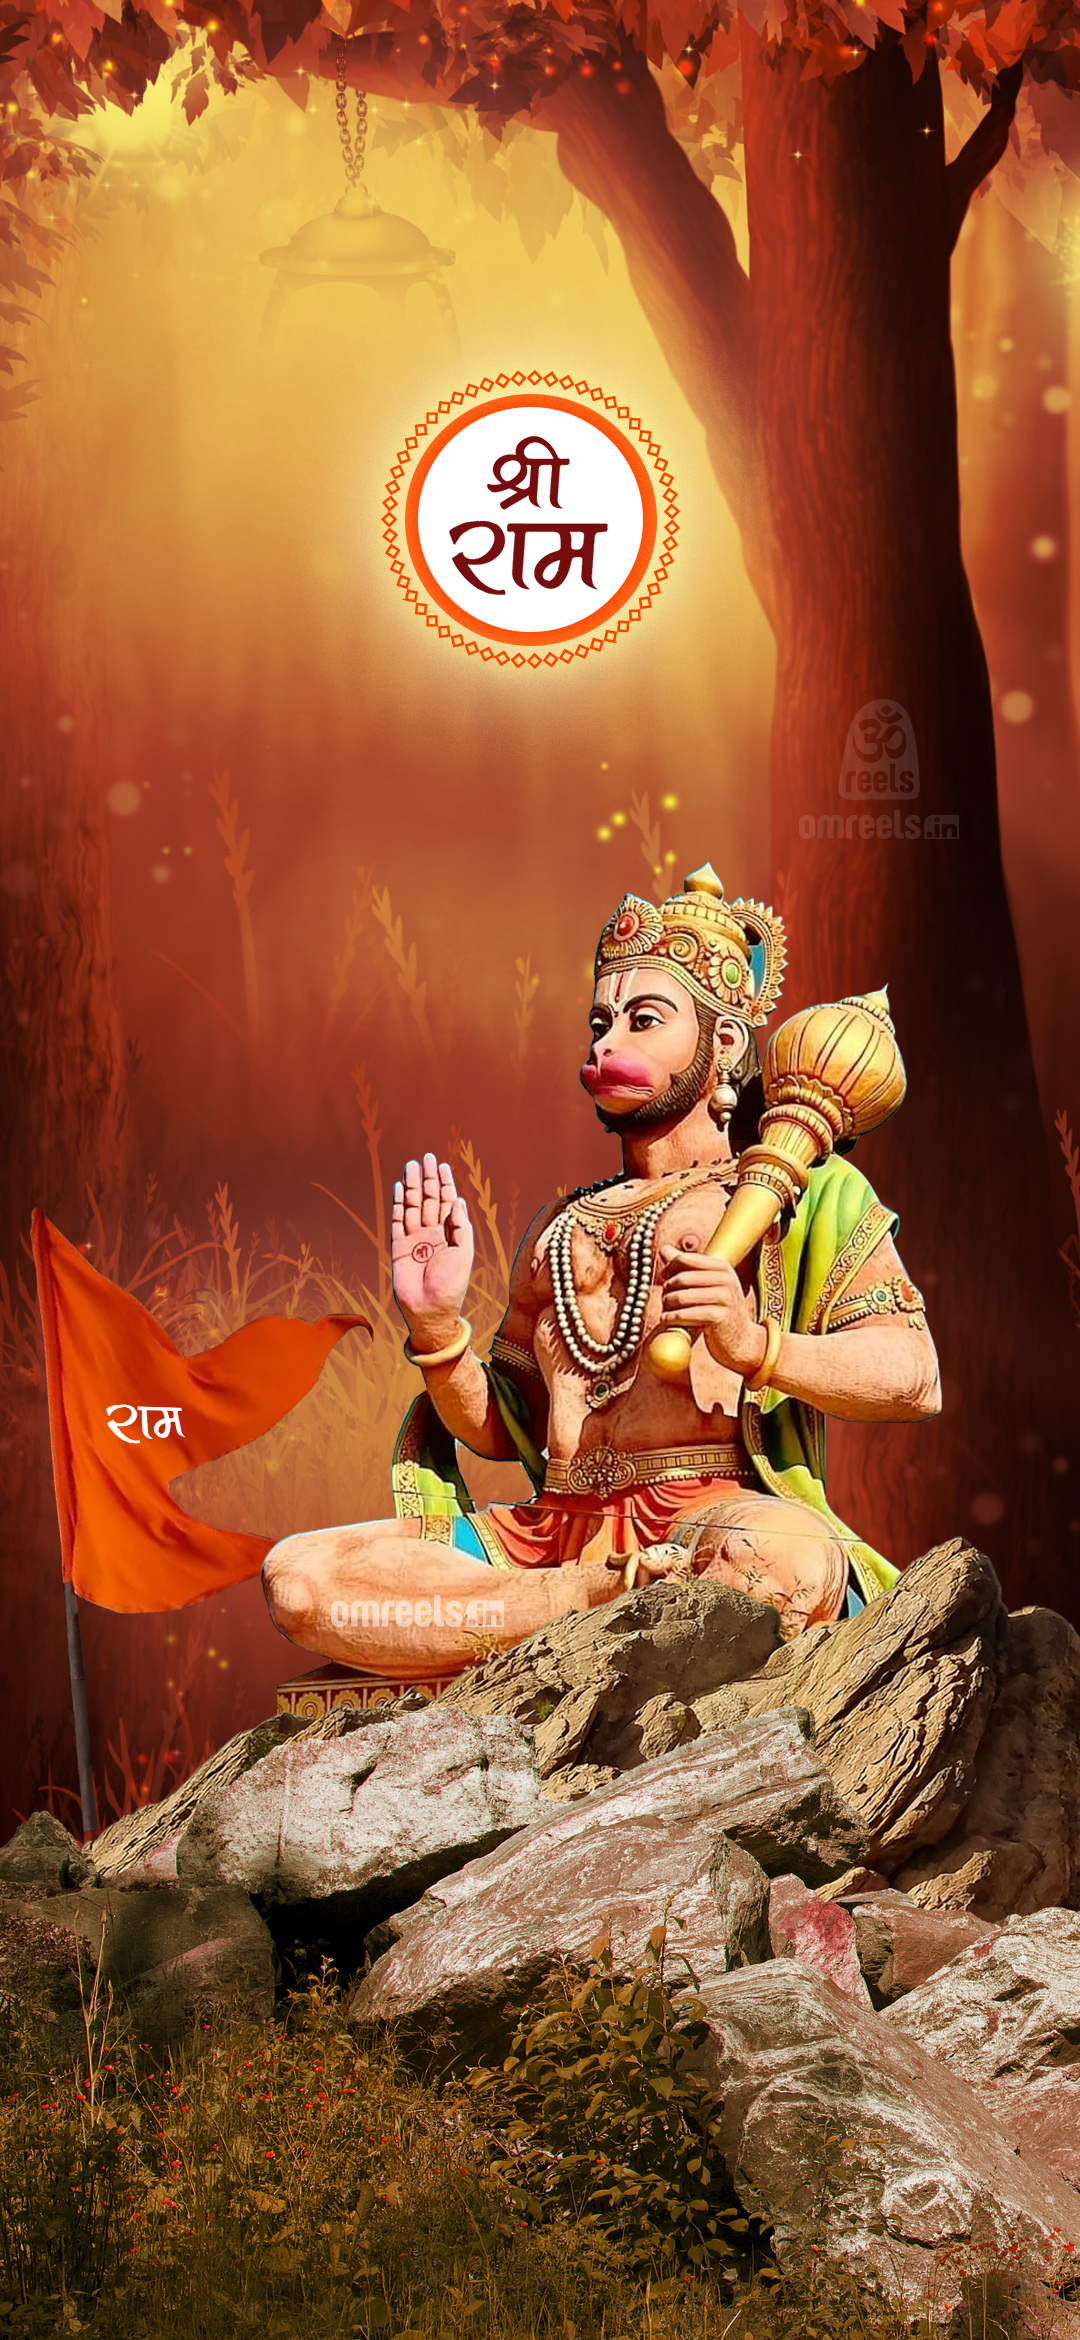 Hanuman ji HD Wallpaper Free Download - Om Reels